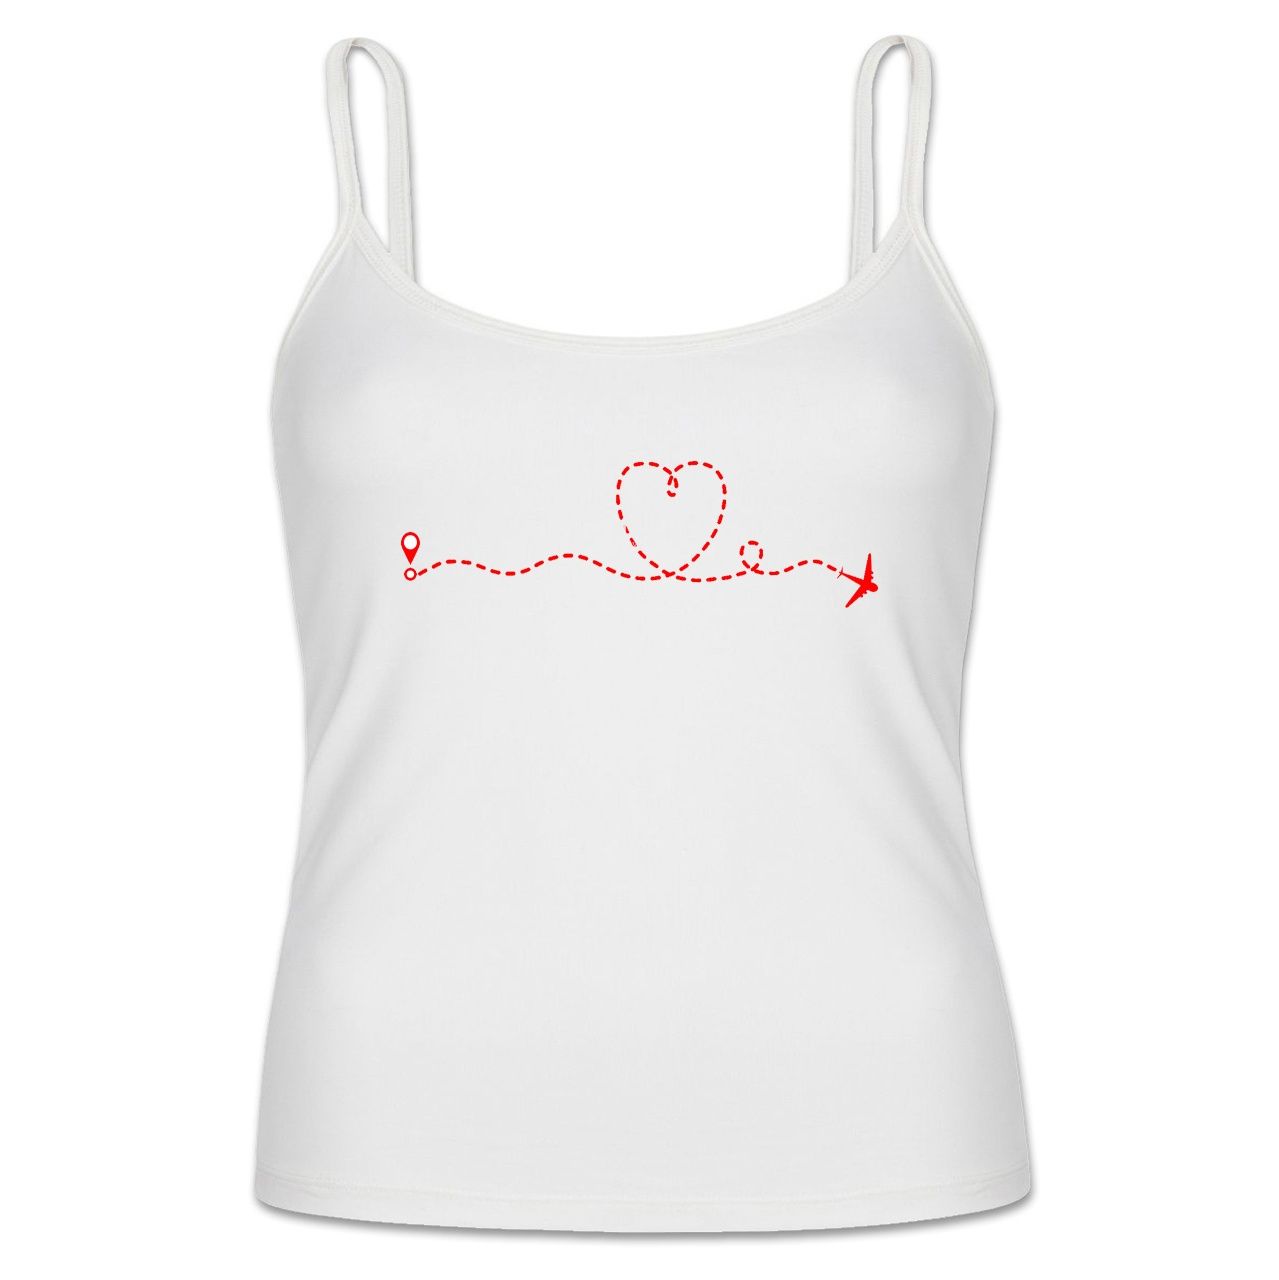 تاپ زنانه به رسم طرح مسیر قلب کد 774 -  - 1